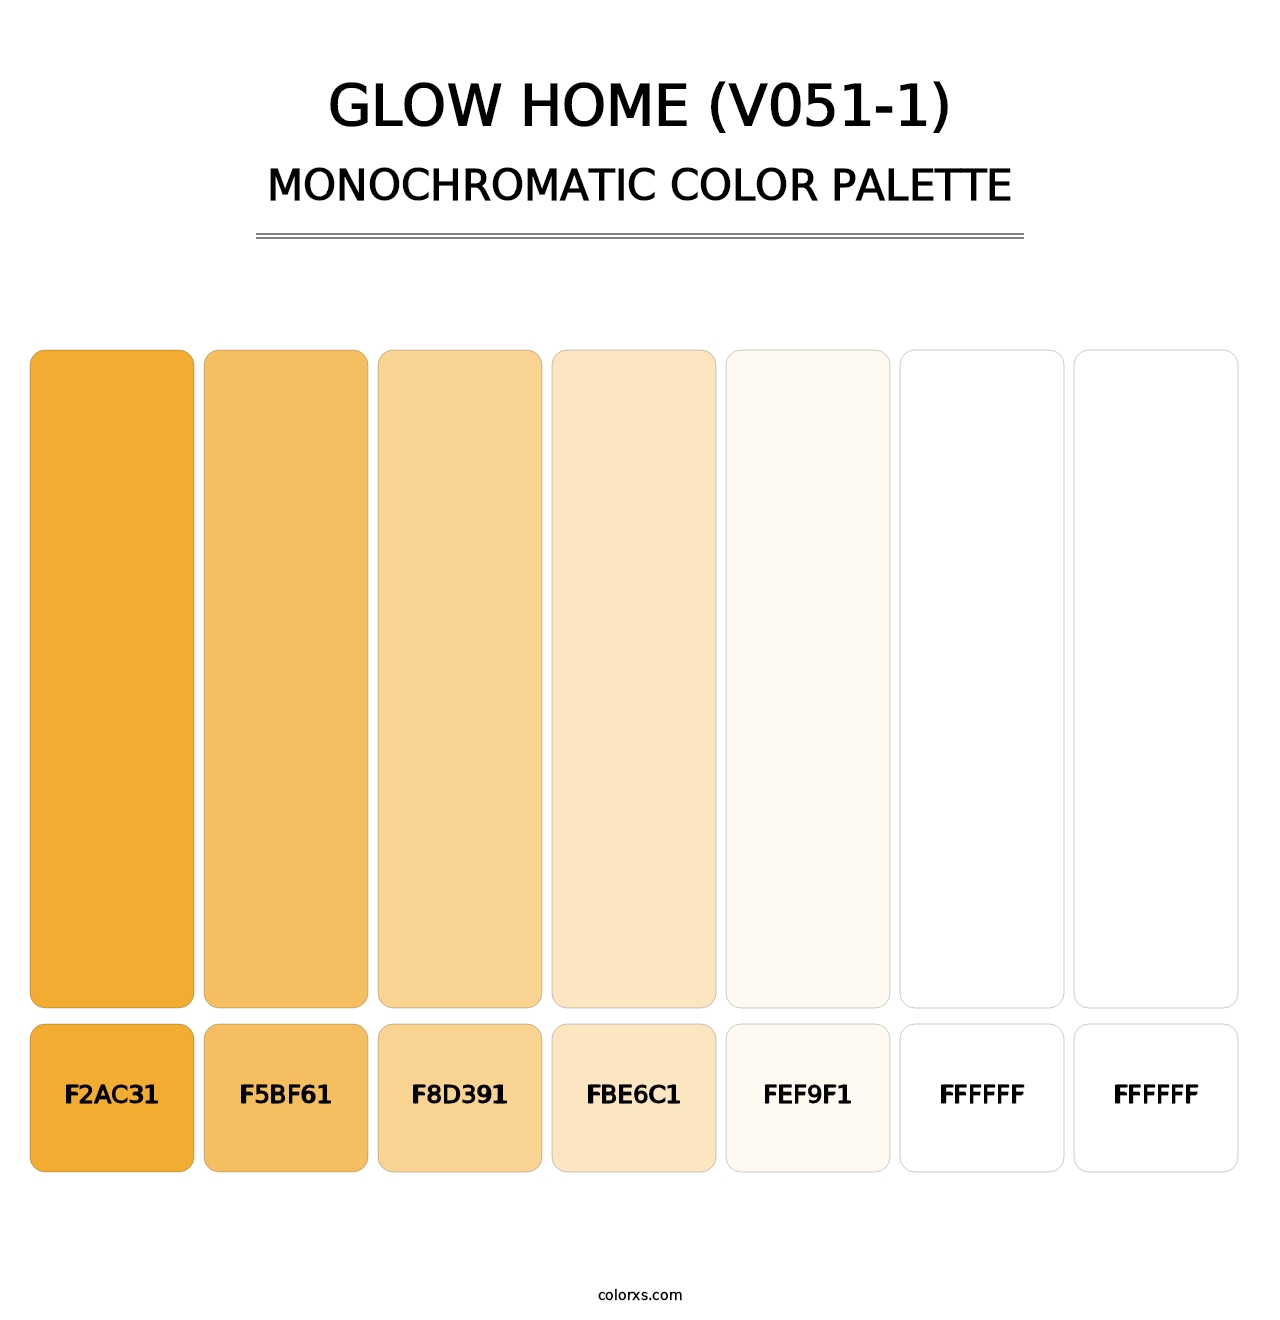 Glow Home (V051-1) - Monochromatic Color Palette